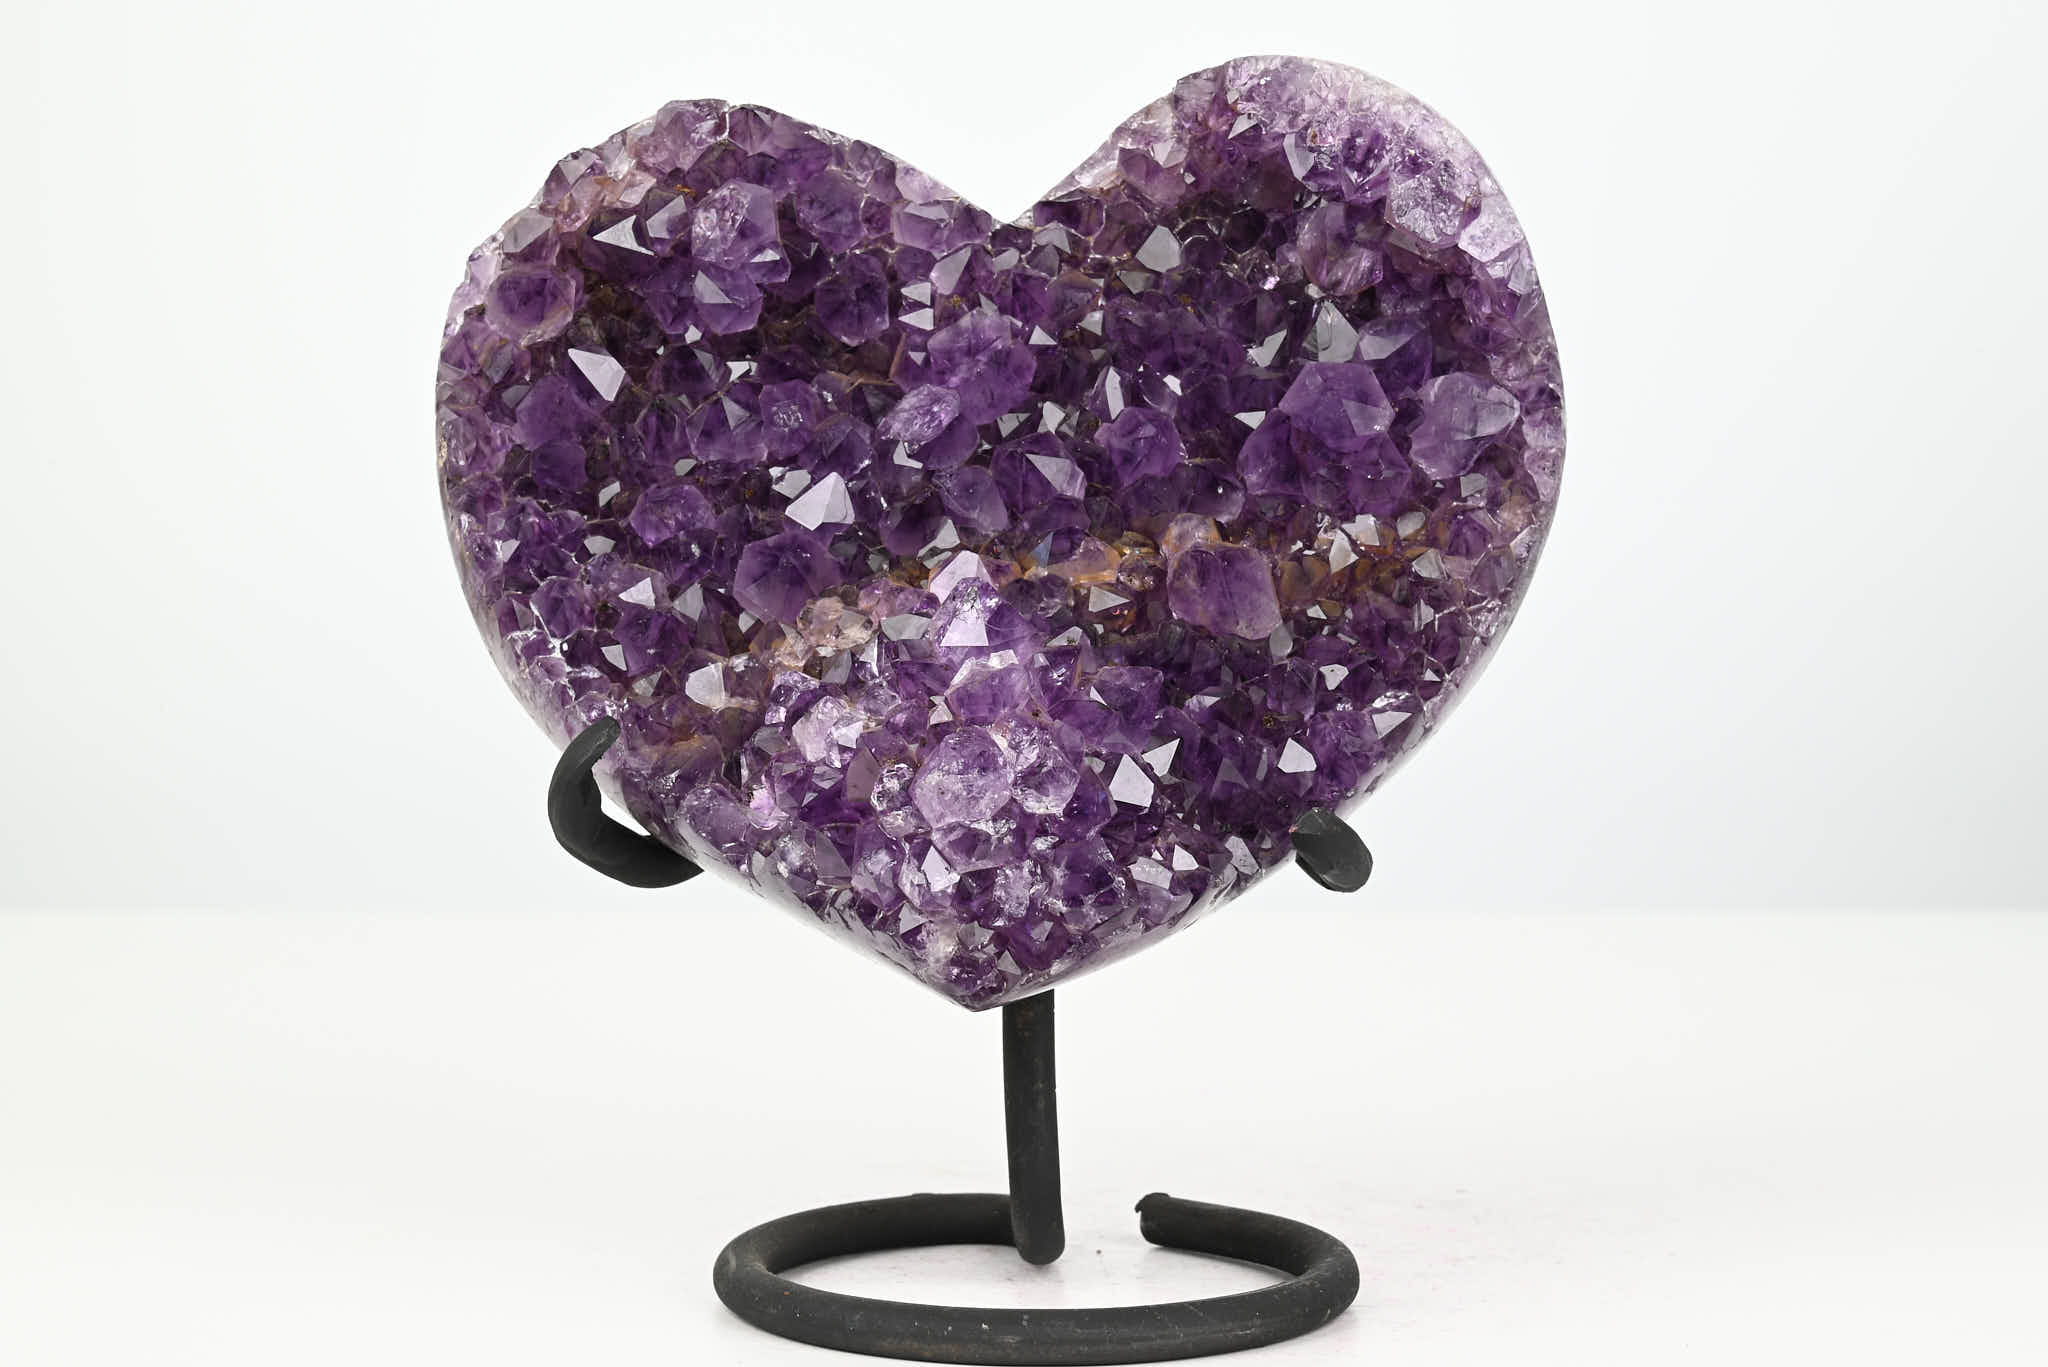 Extra Quality Amethyst Geode Heart - 906g, 15cm high - #HTAMET-34015